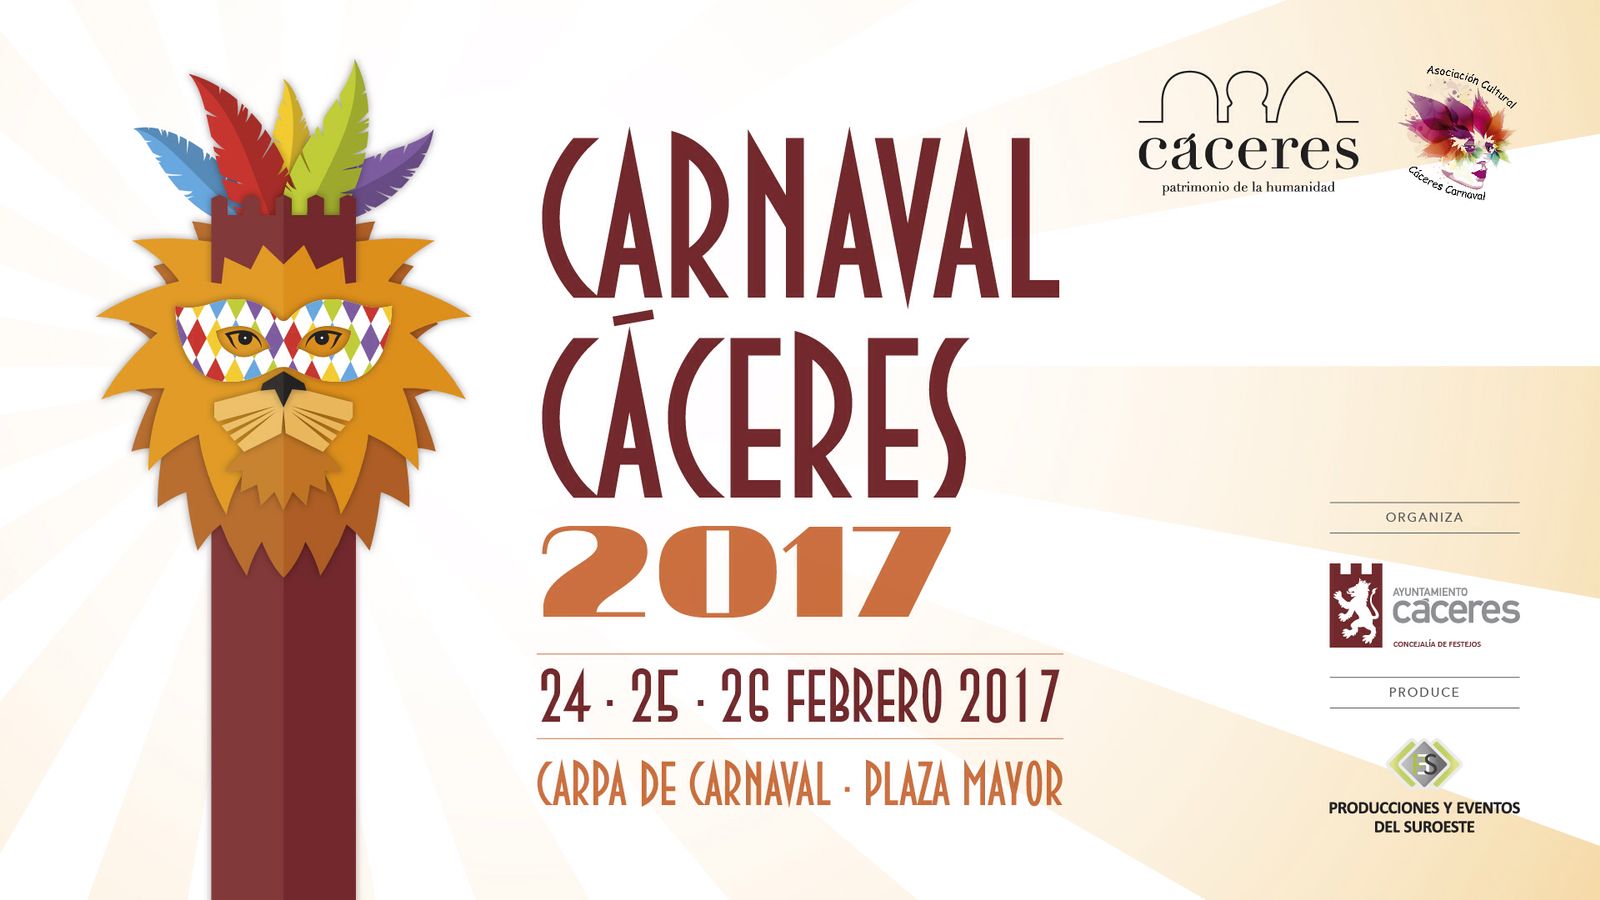 Carnaval Cáceres 2017